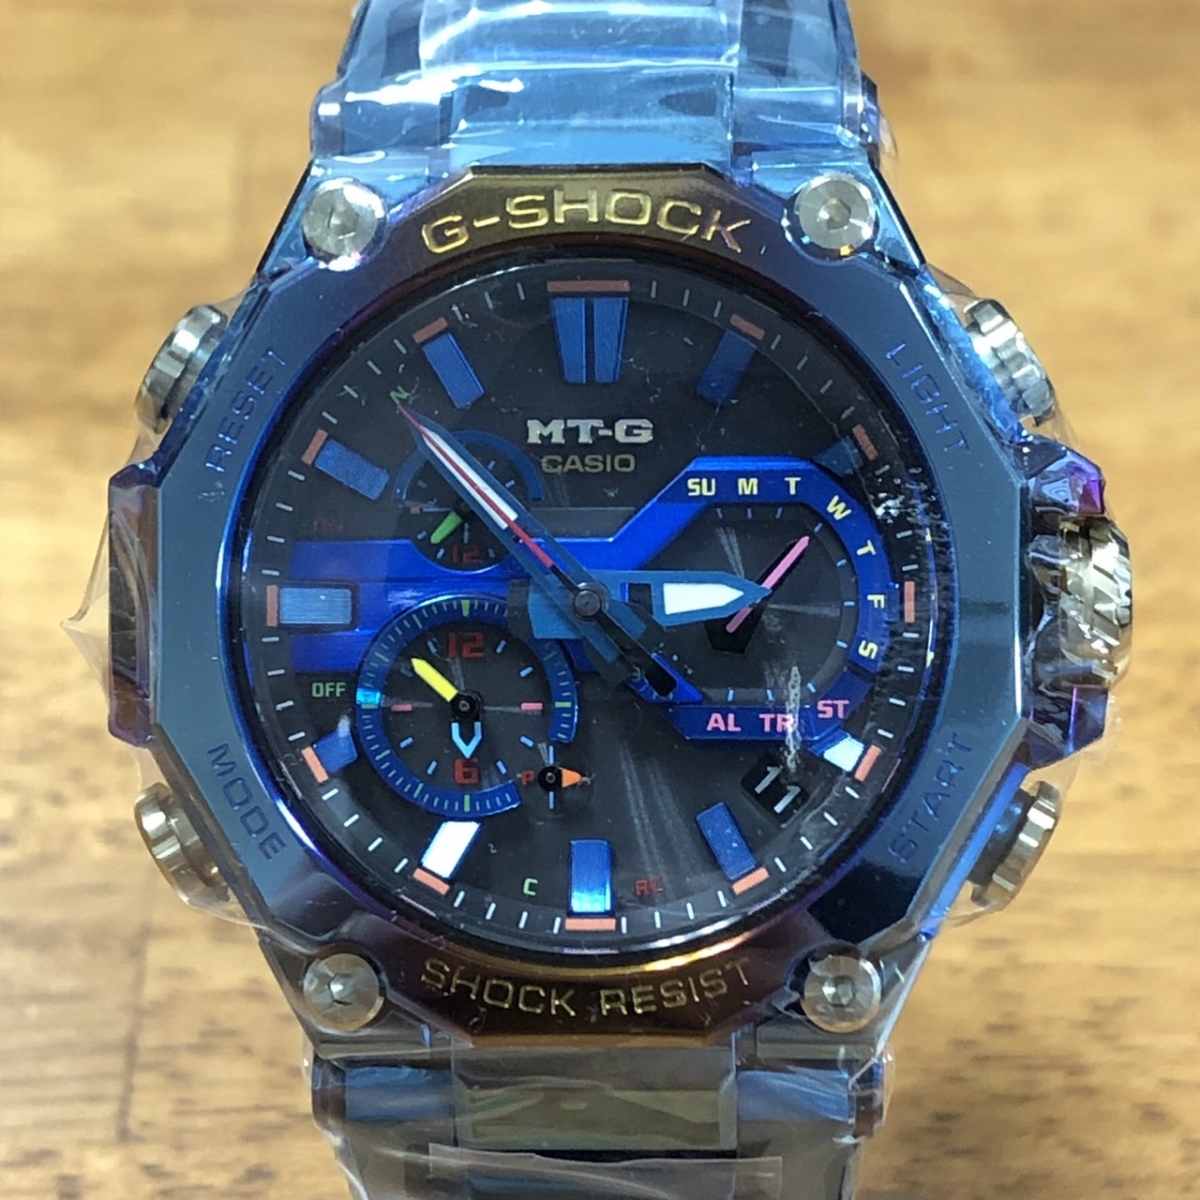 G-SHOCKのMTG-B2000PH-2AJR 鳳凰・ブルーフェニックス タフソーラー電波腕時計 ブラック レインボーIPの買取実績です。